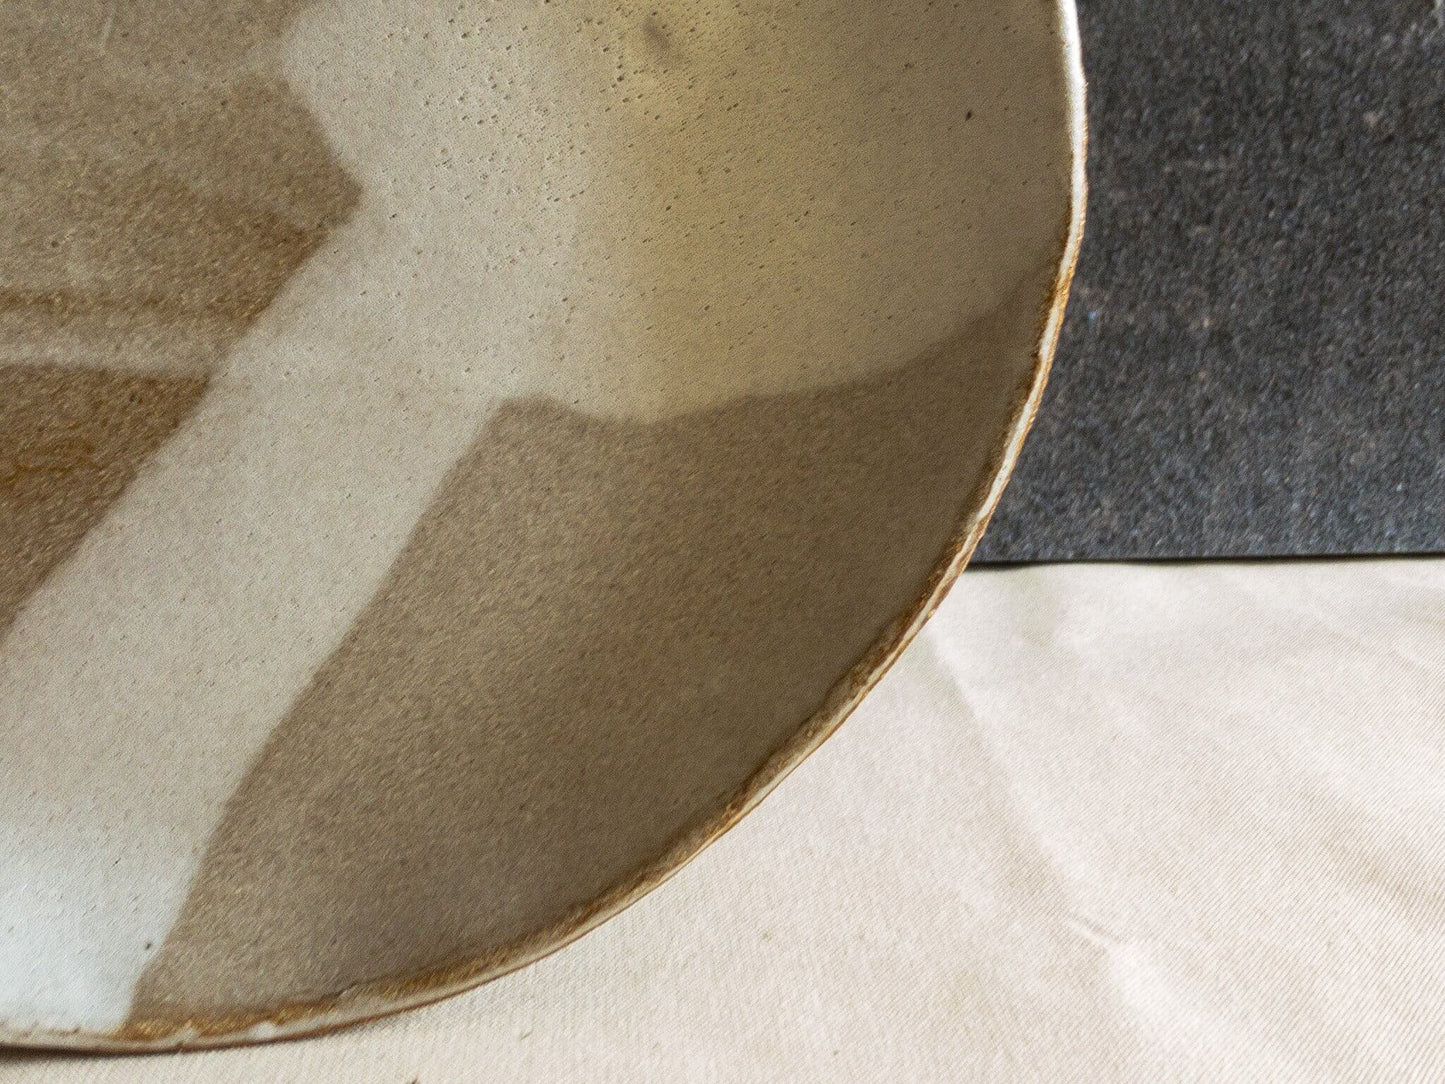 Puro Ceramics Large shallow toasted bowl